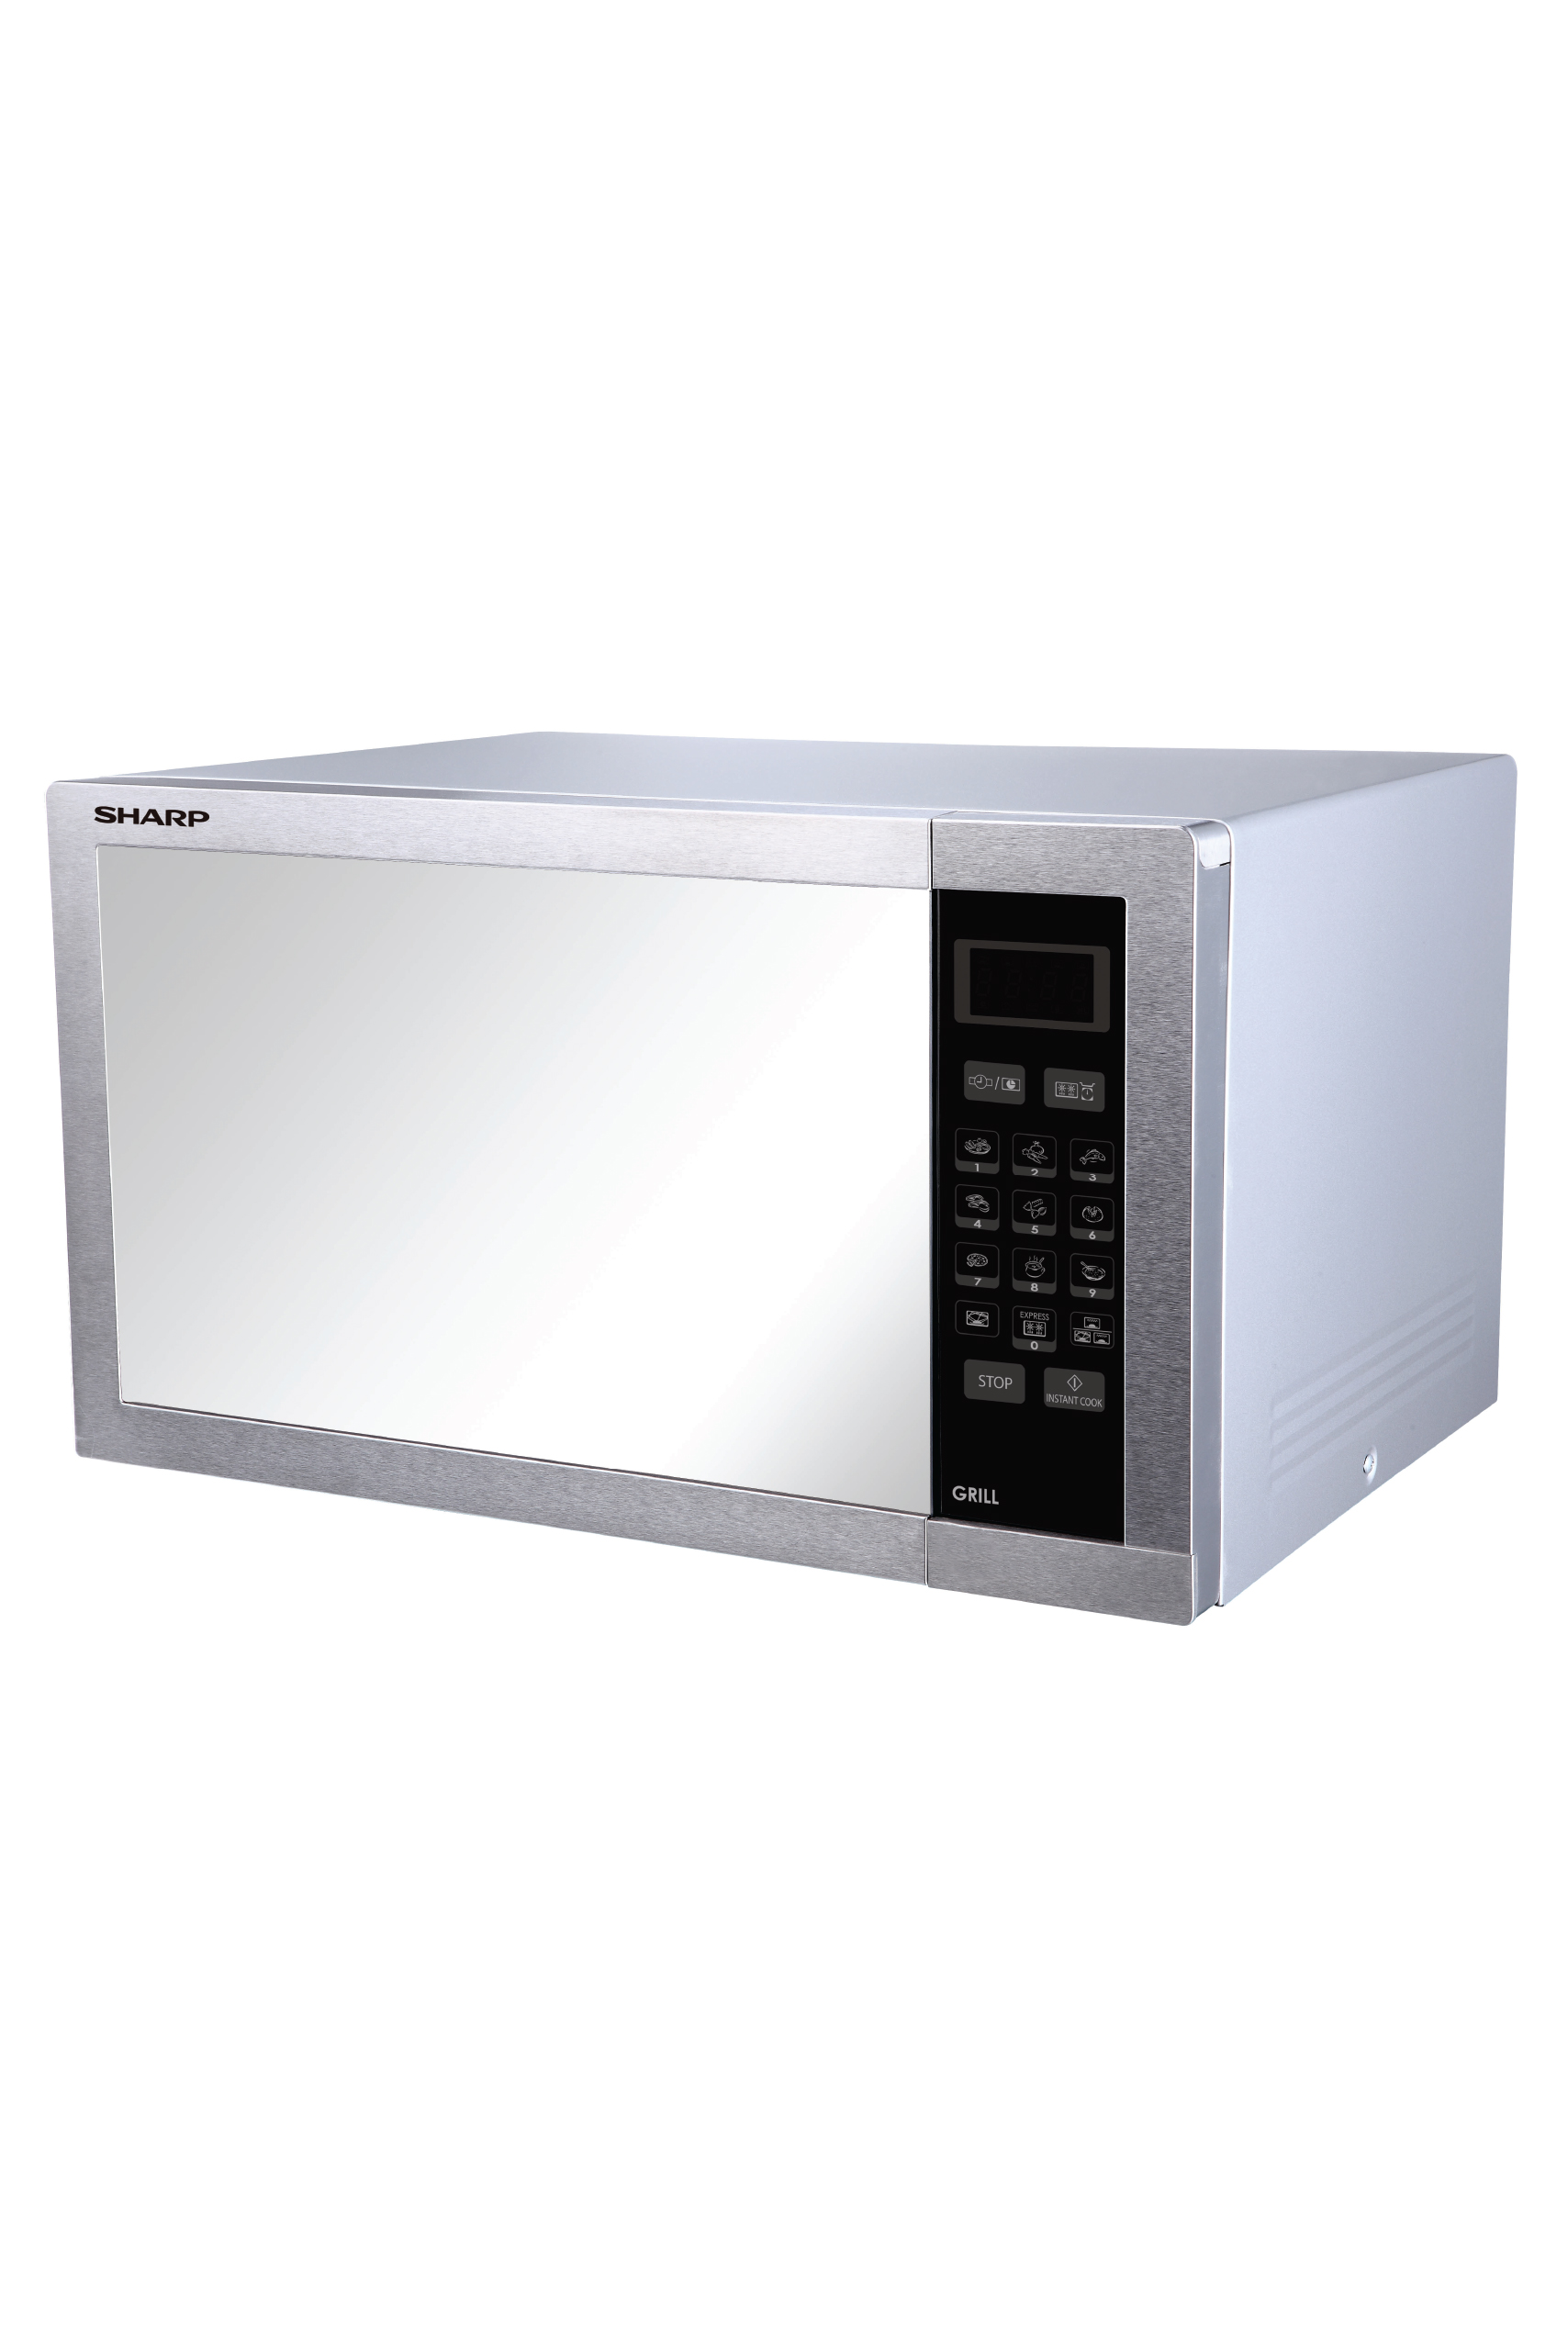 Sharp Microwave 34 Liter – Silver